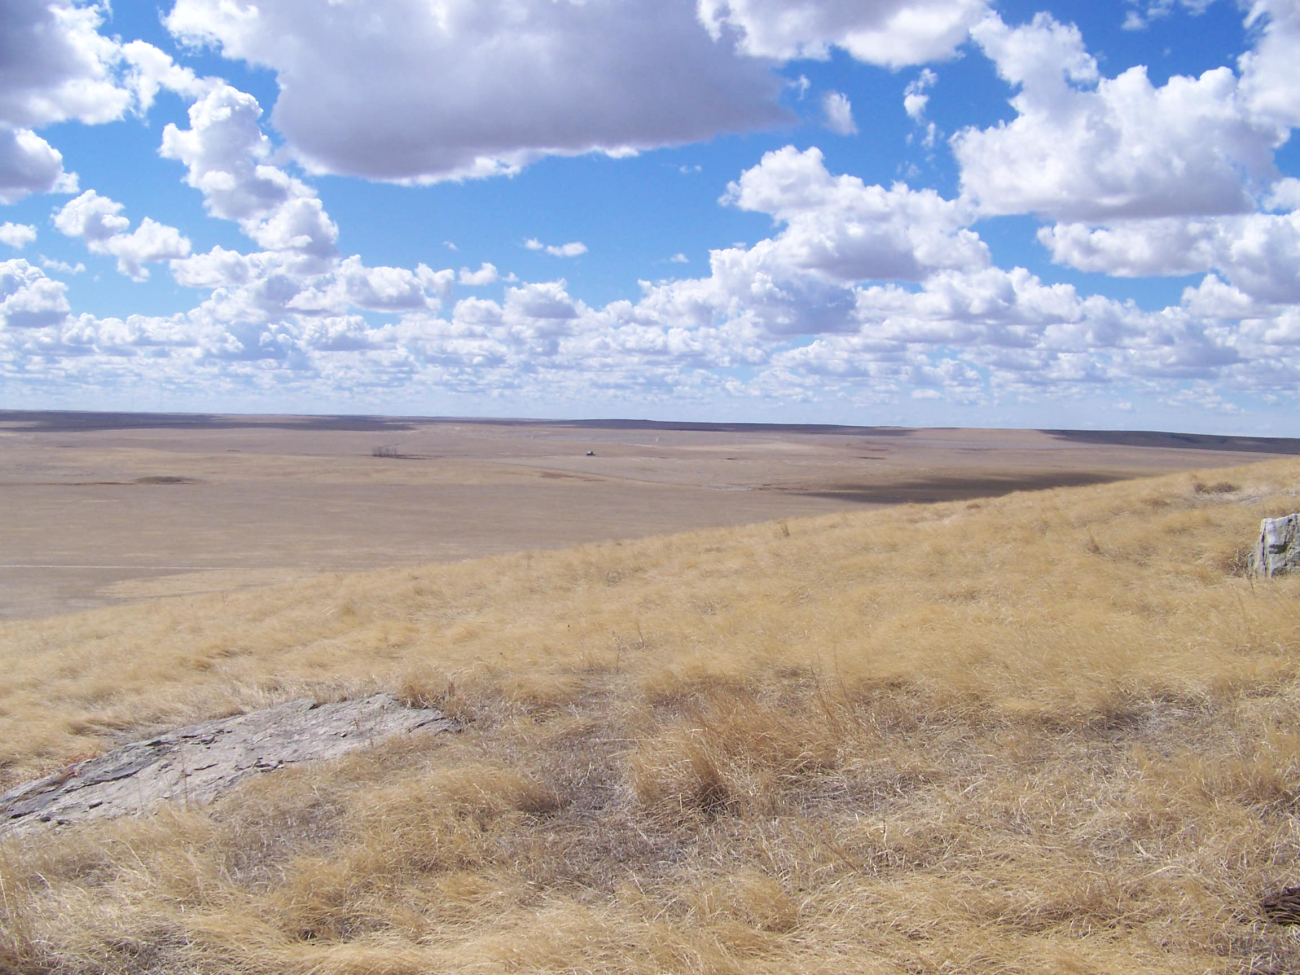 The Great Plains in South Dakota